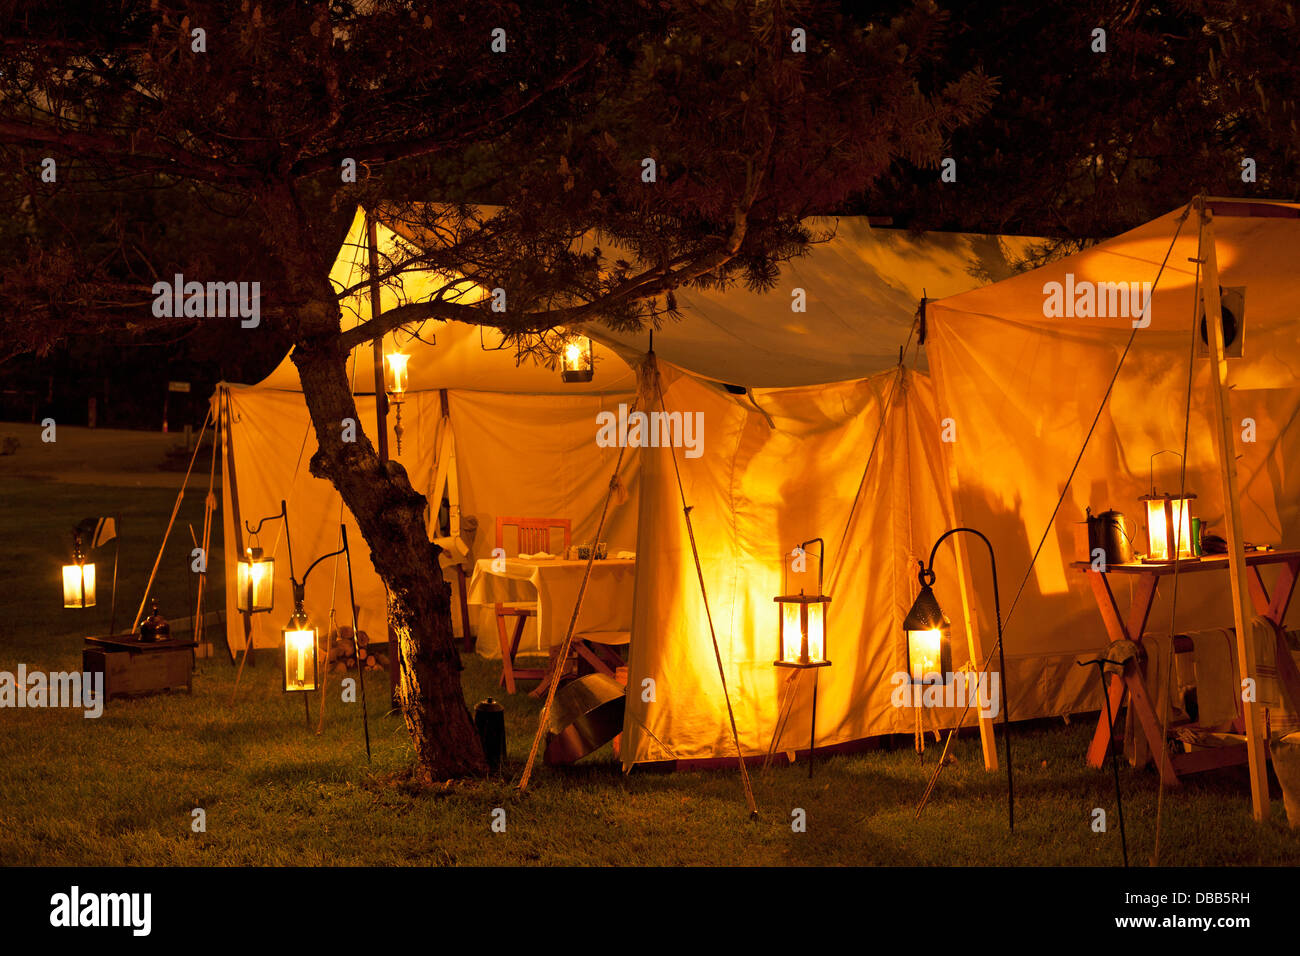 Canada,Ontario,Stoney Creek, War of 1812, Battle of Stoney Creek, tents illuminated at night with laterns Stock Photo